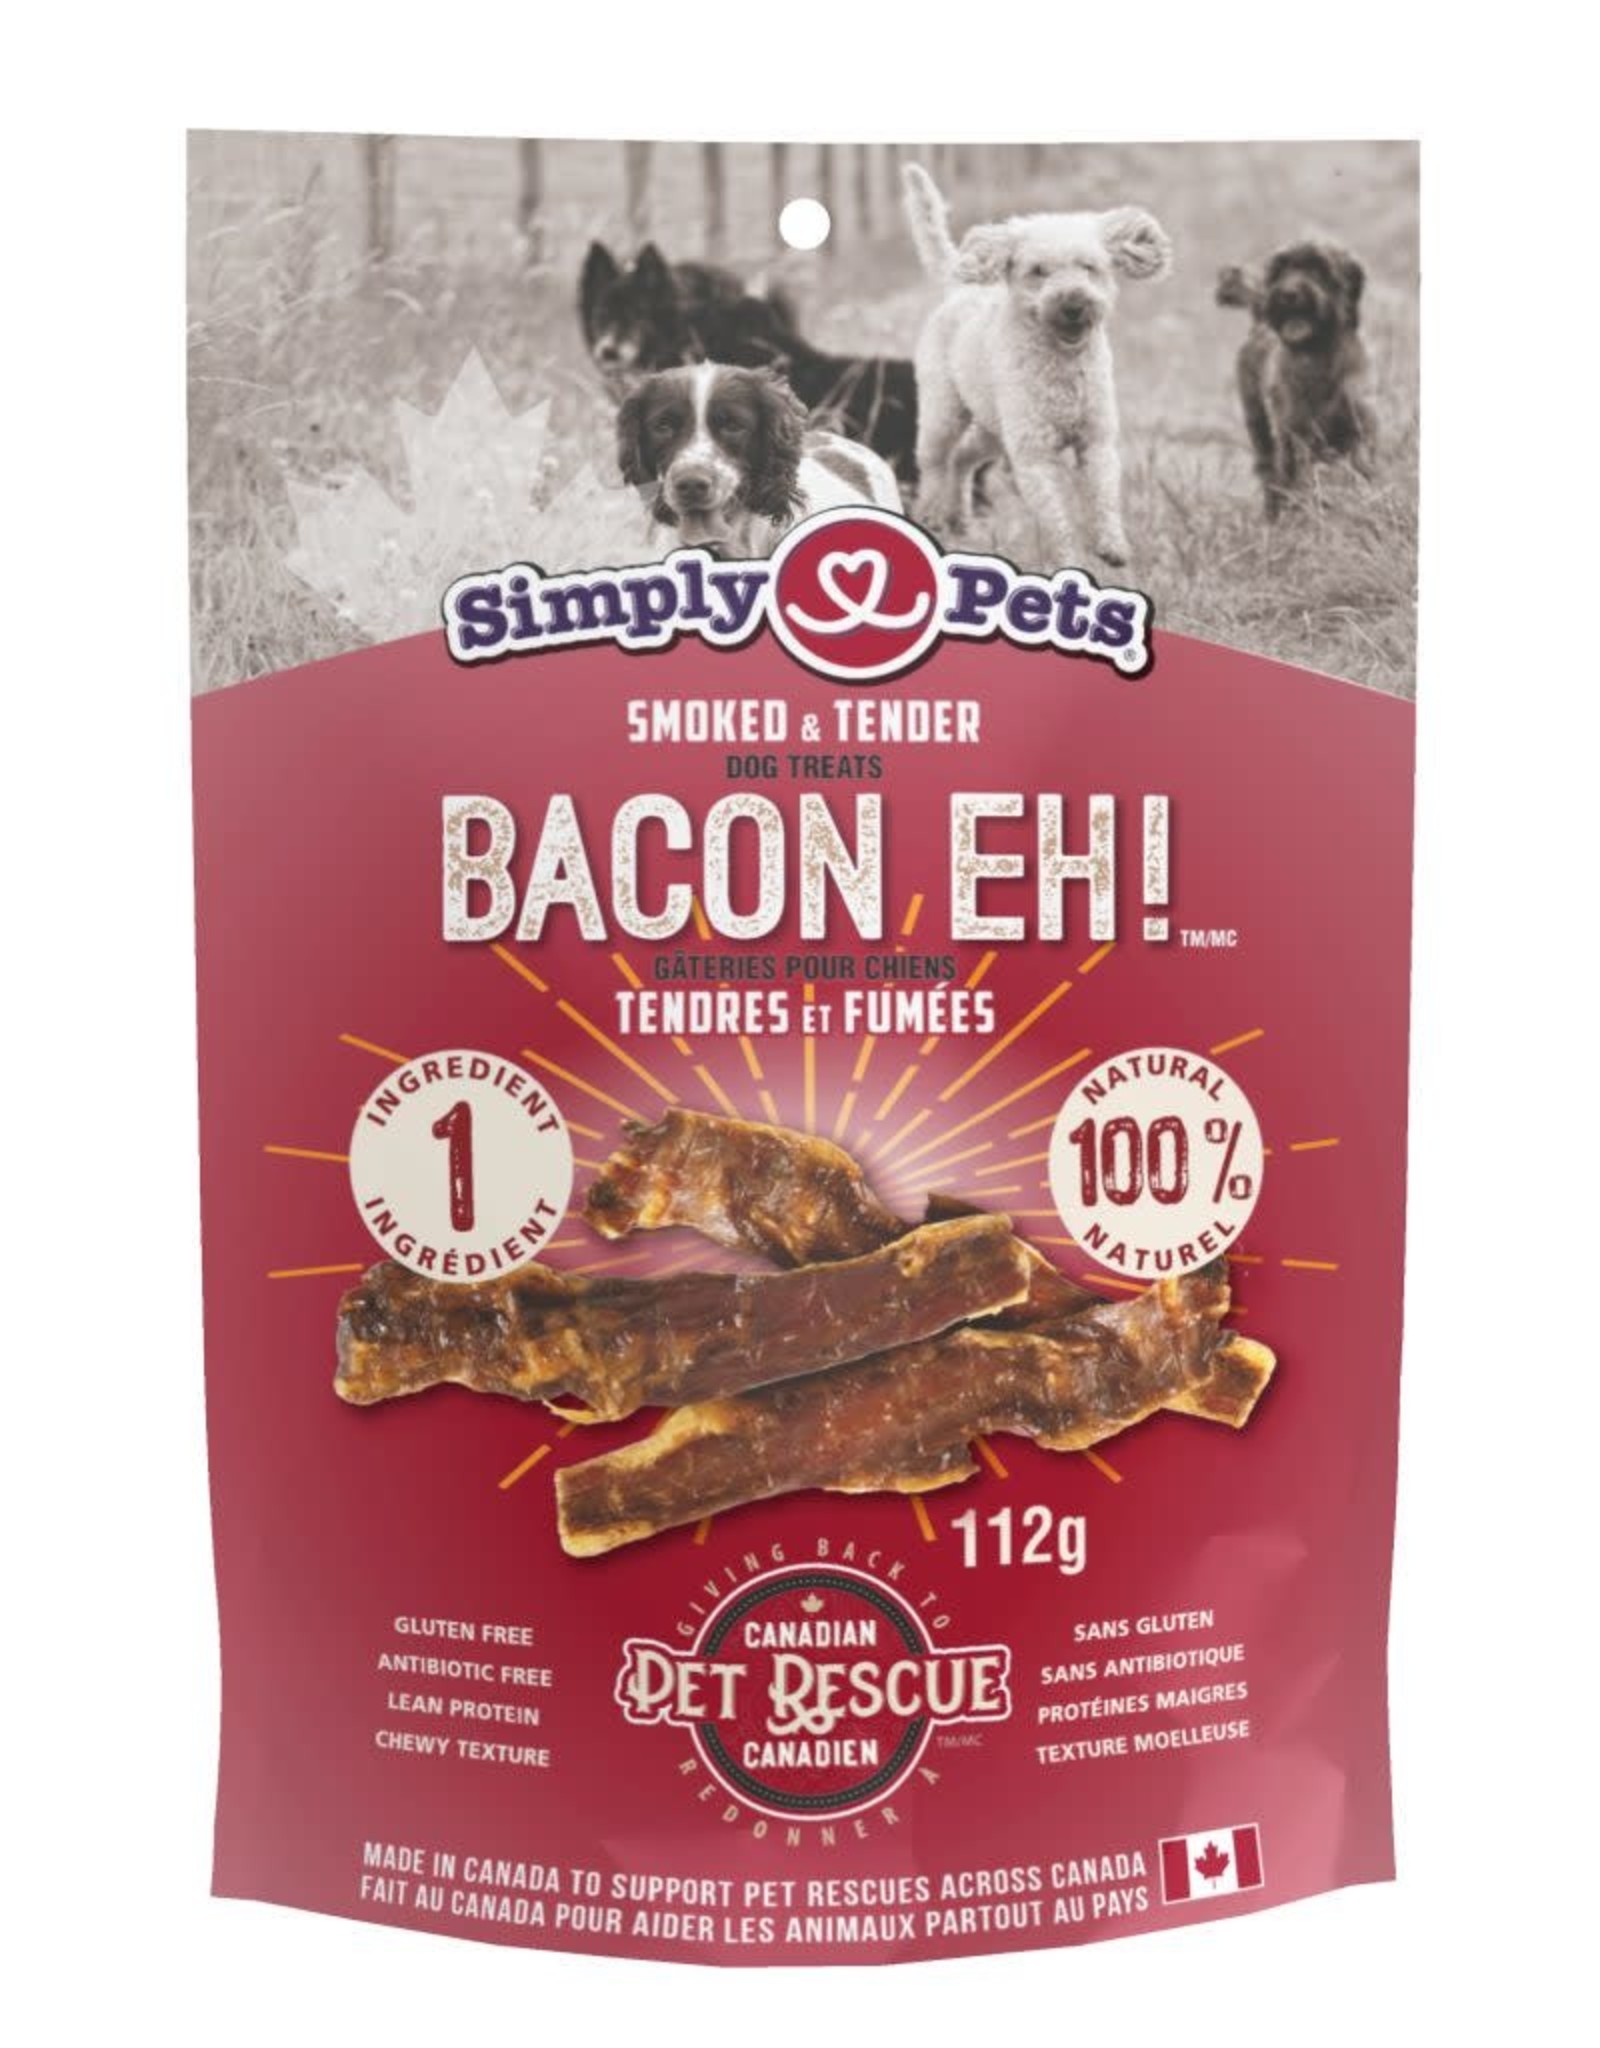 Simply Pets Simply Pets Bacon Eh! Smoke & Tender Treats 112 g